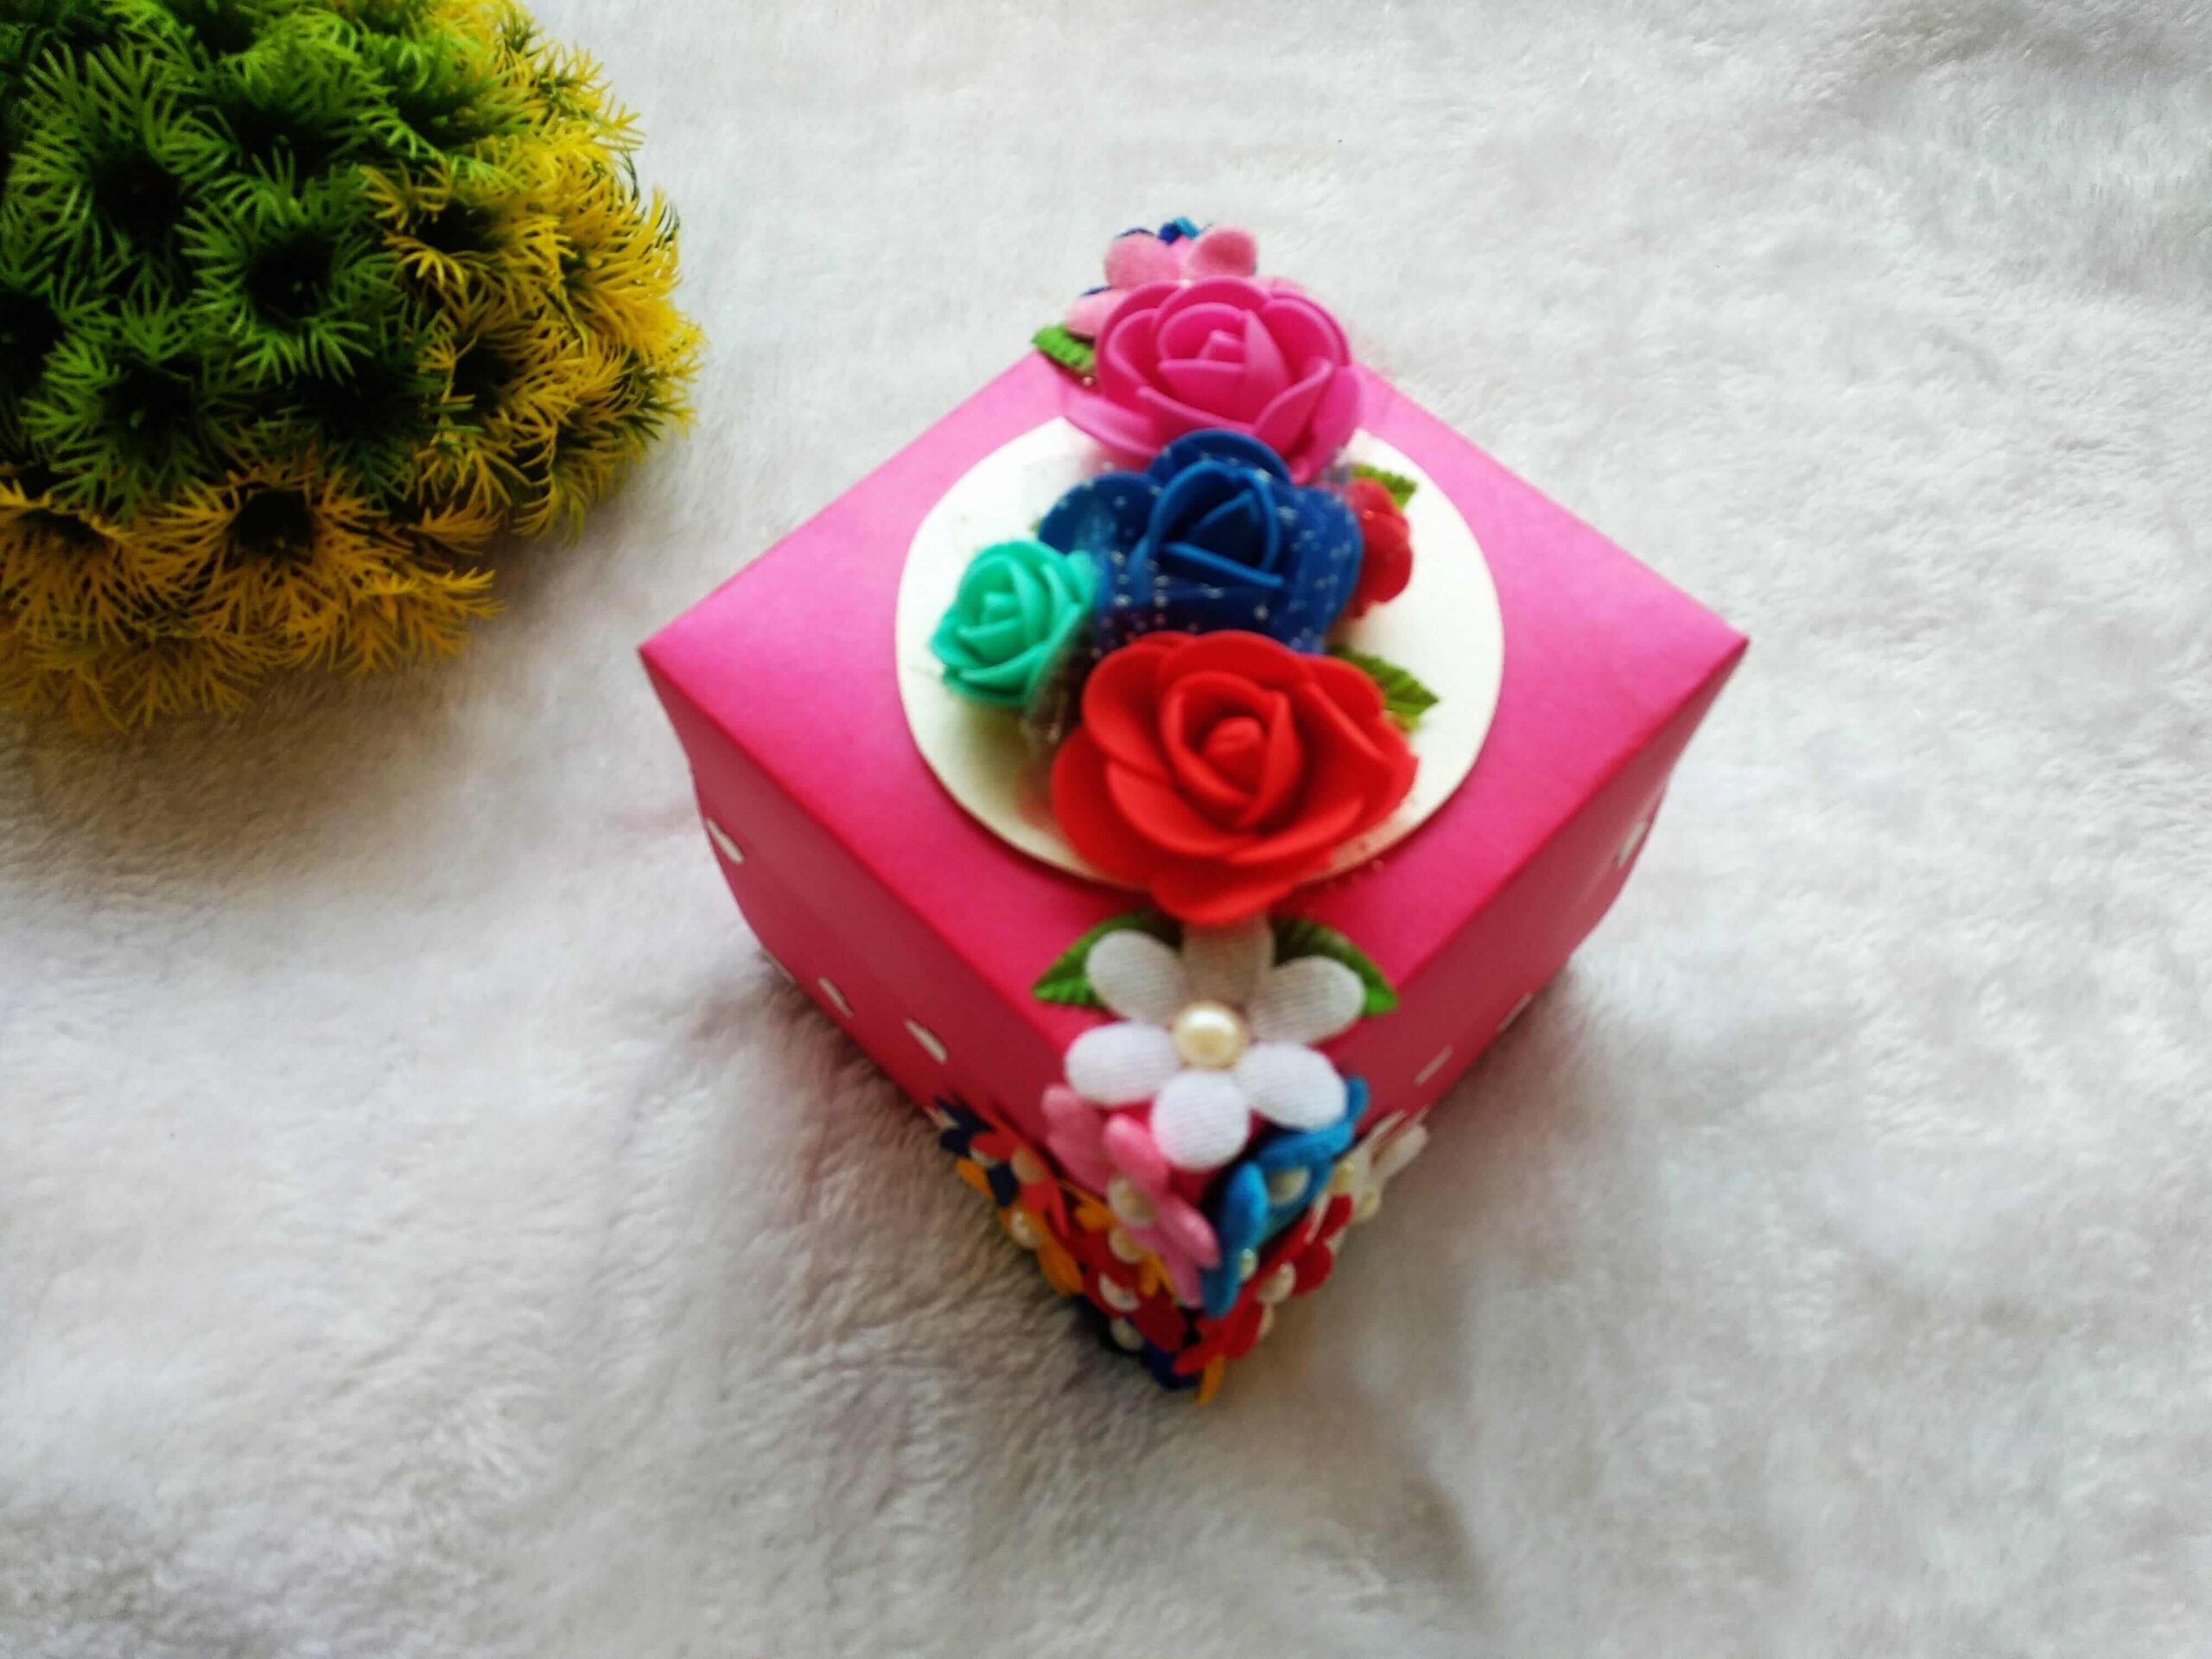 floral chocolate explosion box | photo chocolate explosion box| Valentine Chocolate Explosion Box